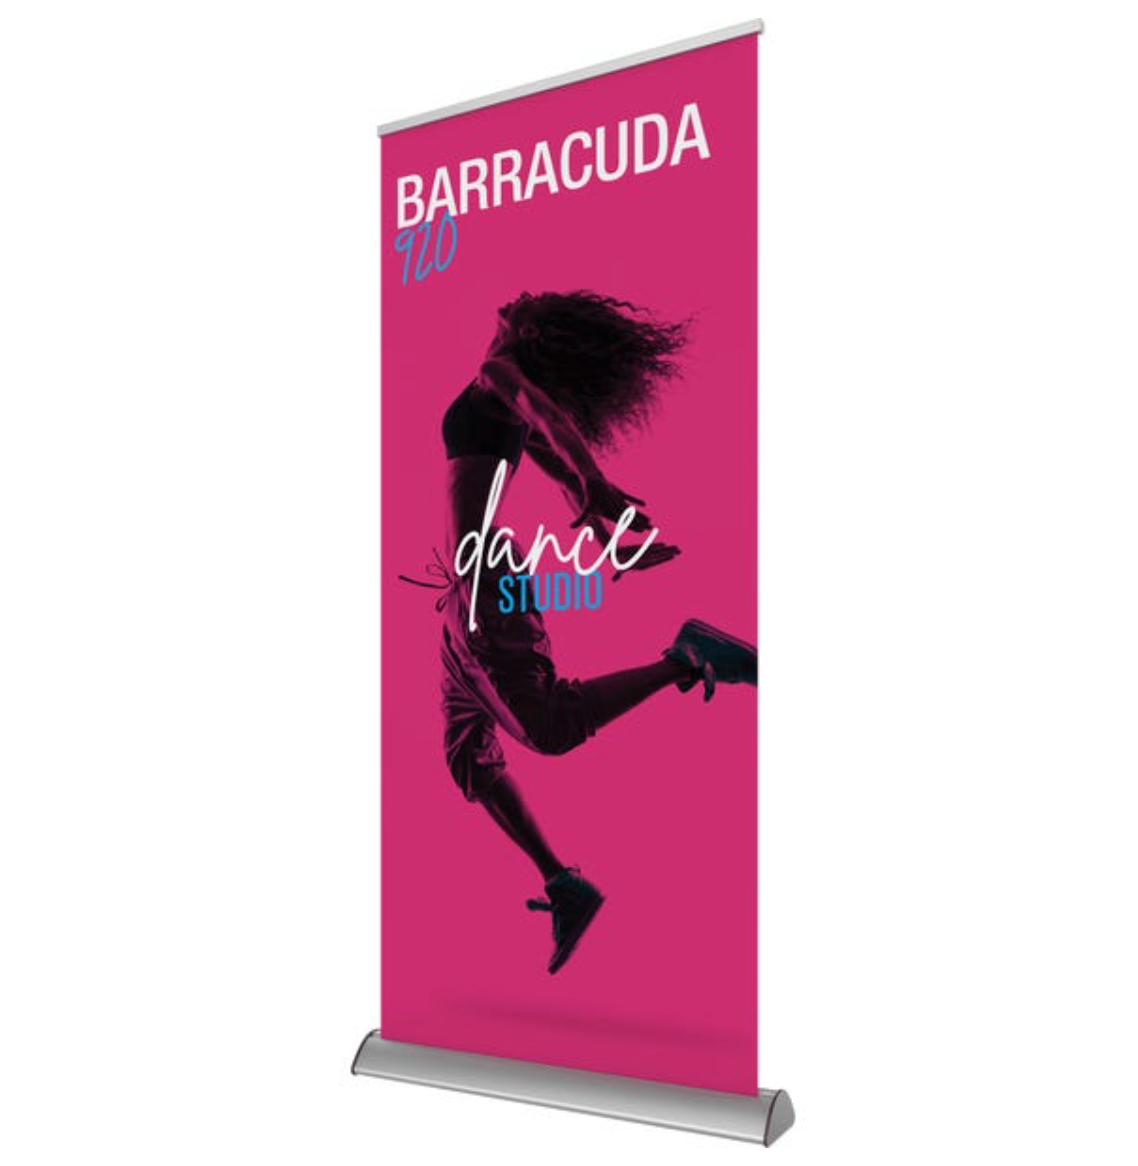 Barracuda 920 Retractable Banner Stand